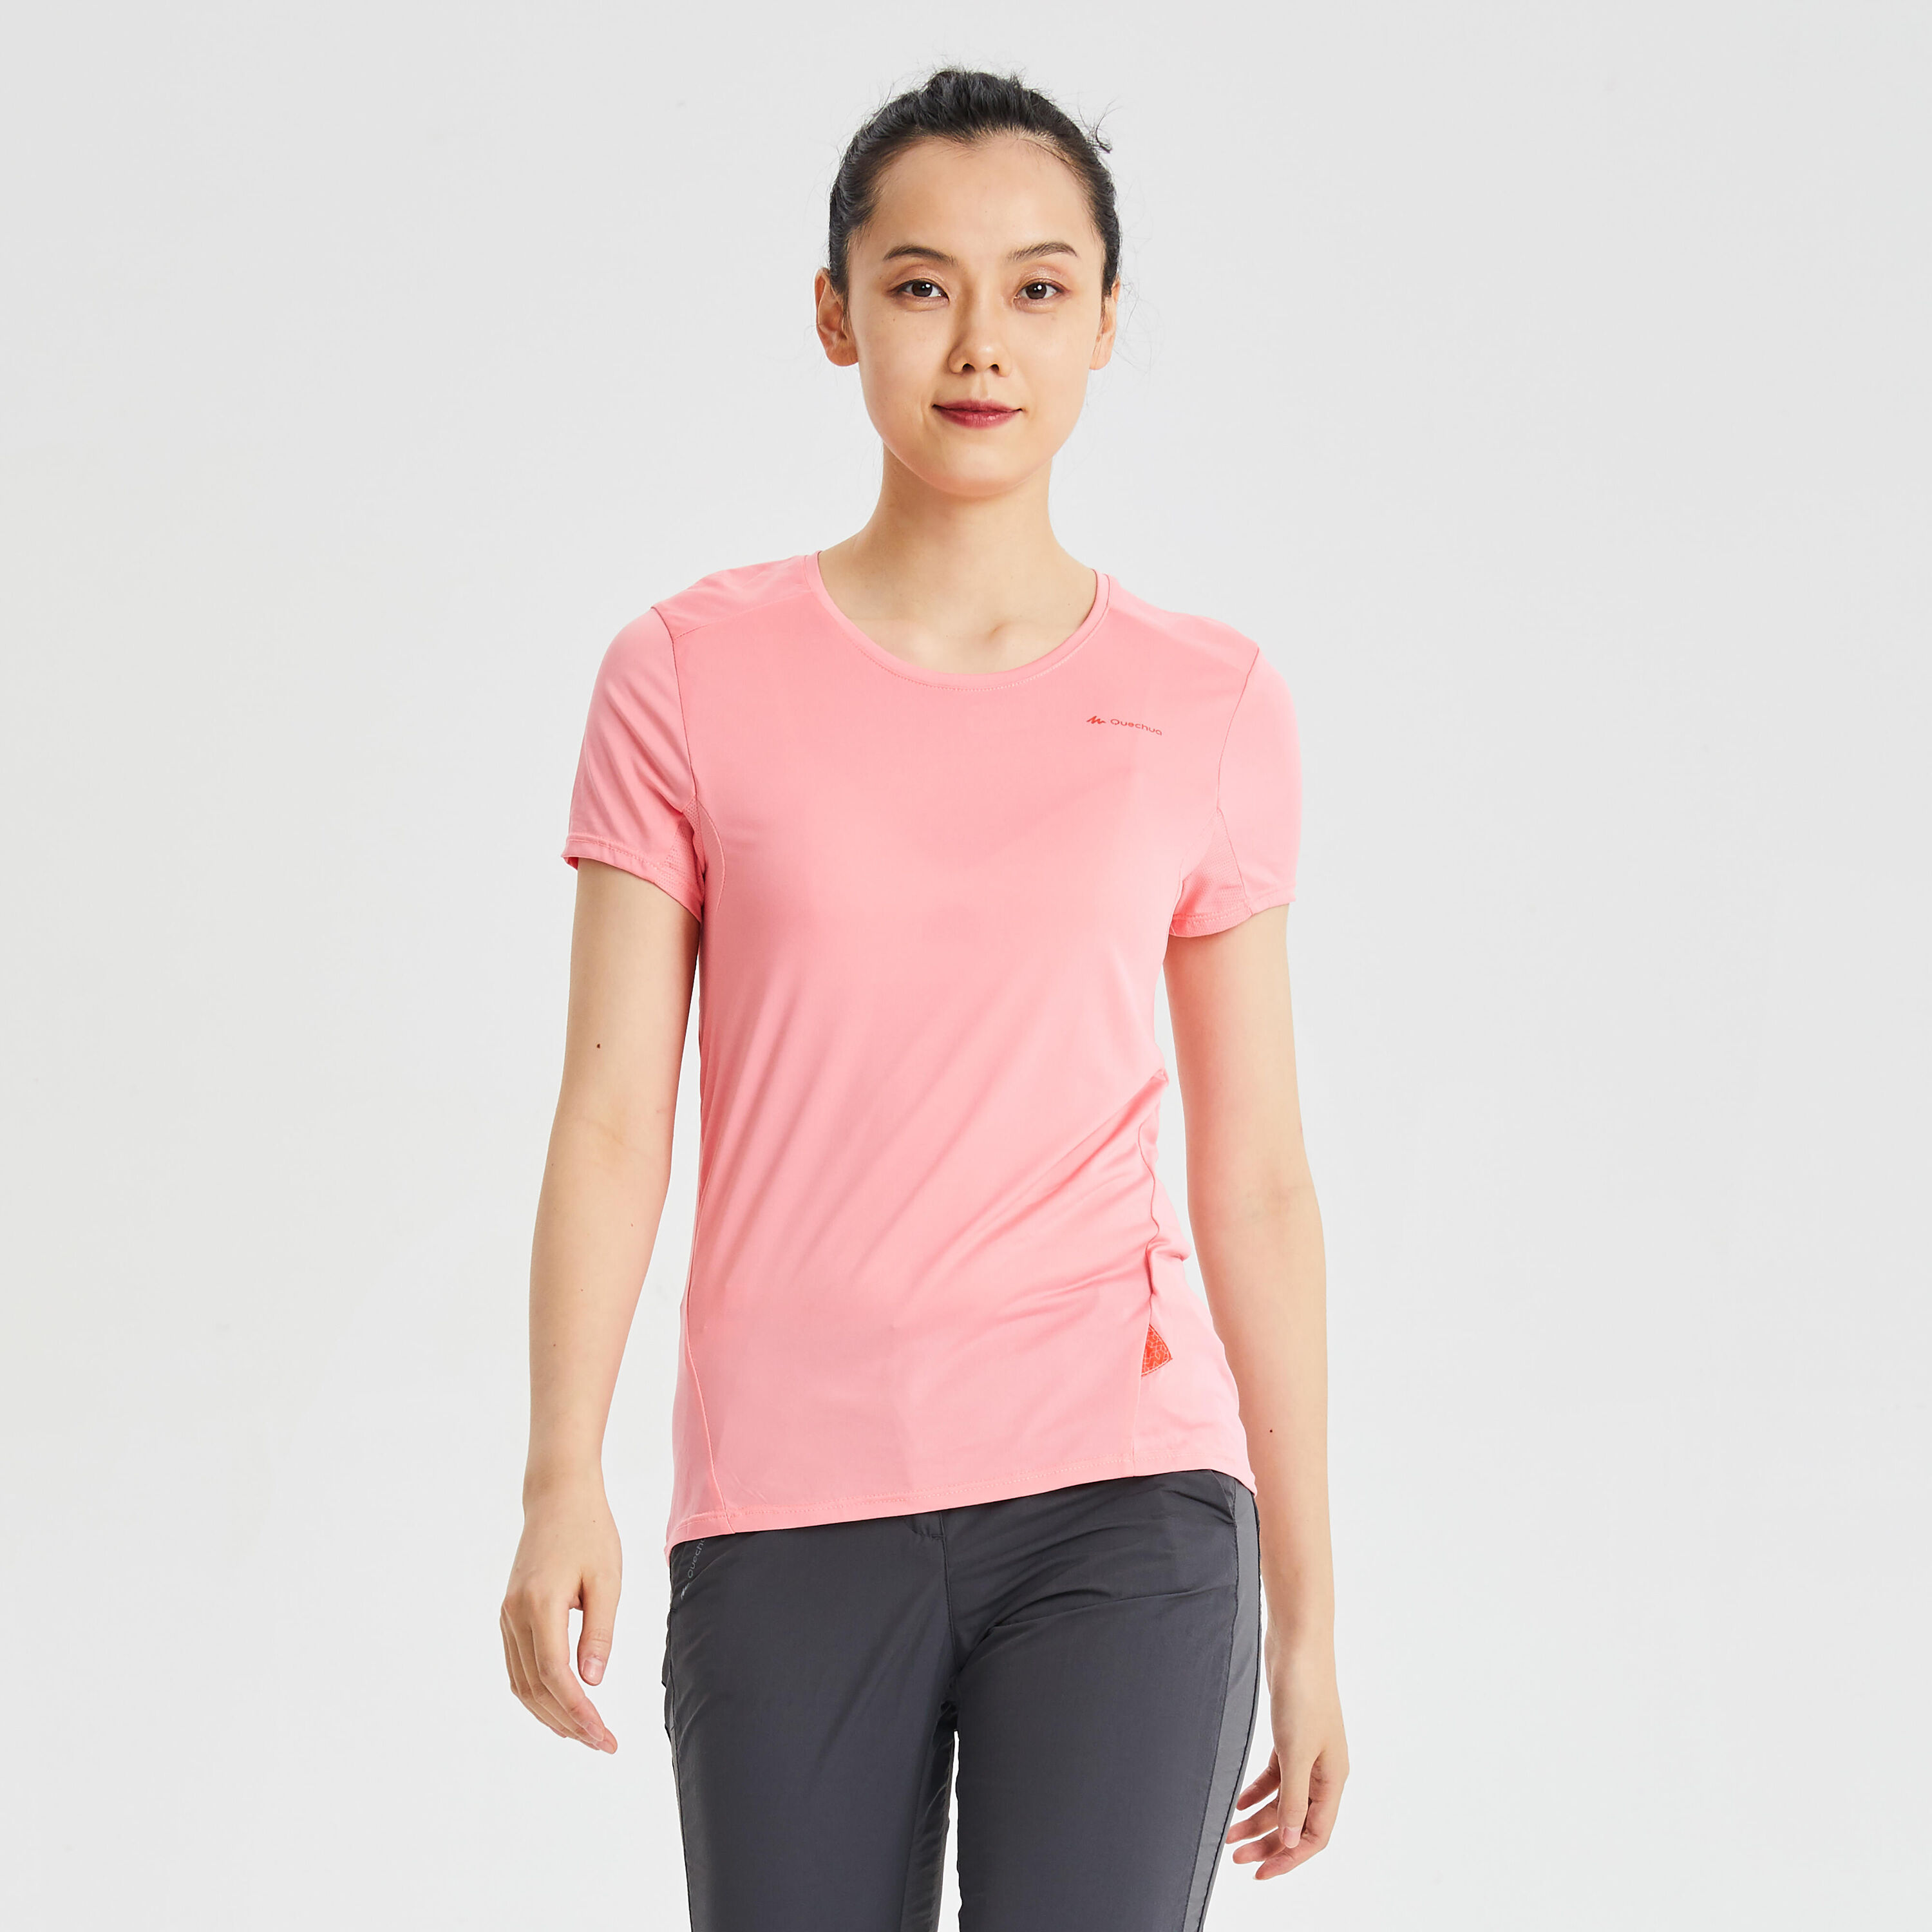 QUECHUA Women's Mountain Walking Short-Sleeved T-Shirt MH100 - Lychee Pink